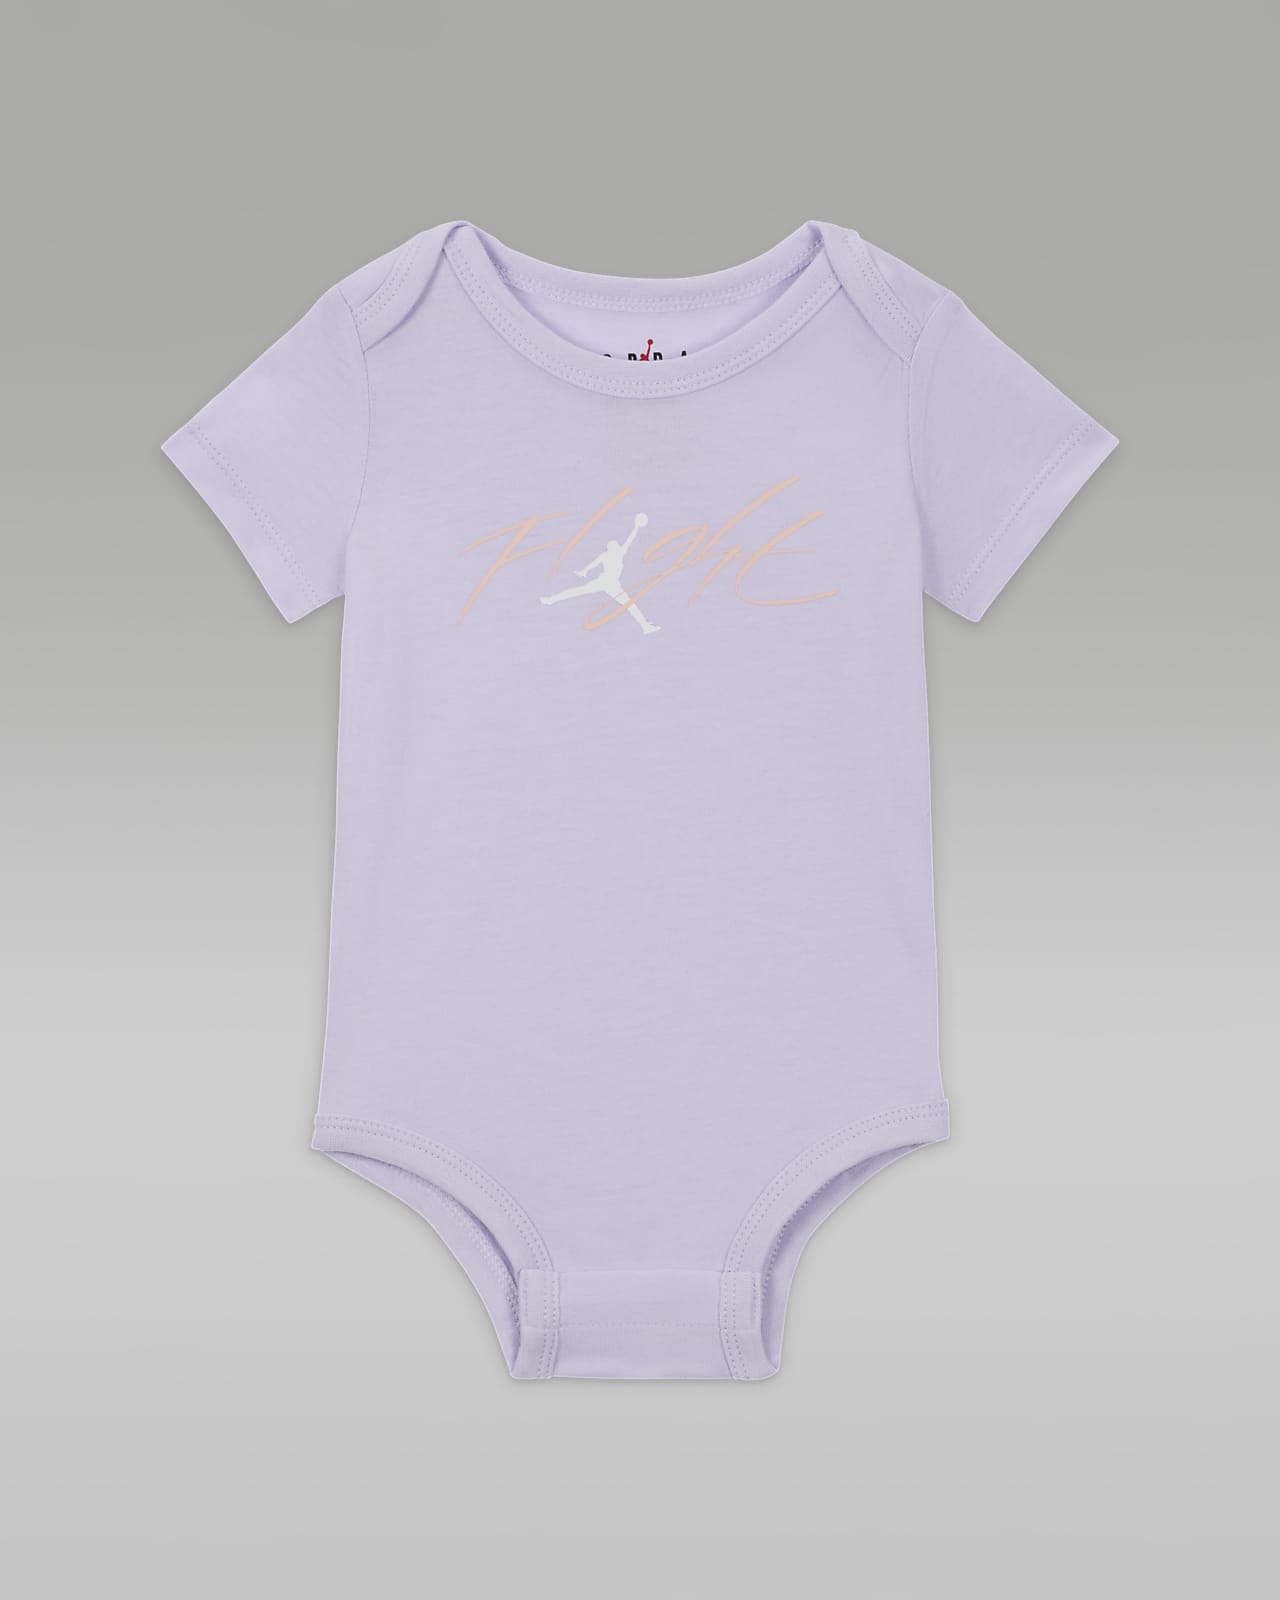 Jordan Flight Bodysuits. Patch Baby Printed (0-9M)